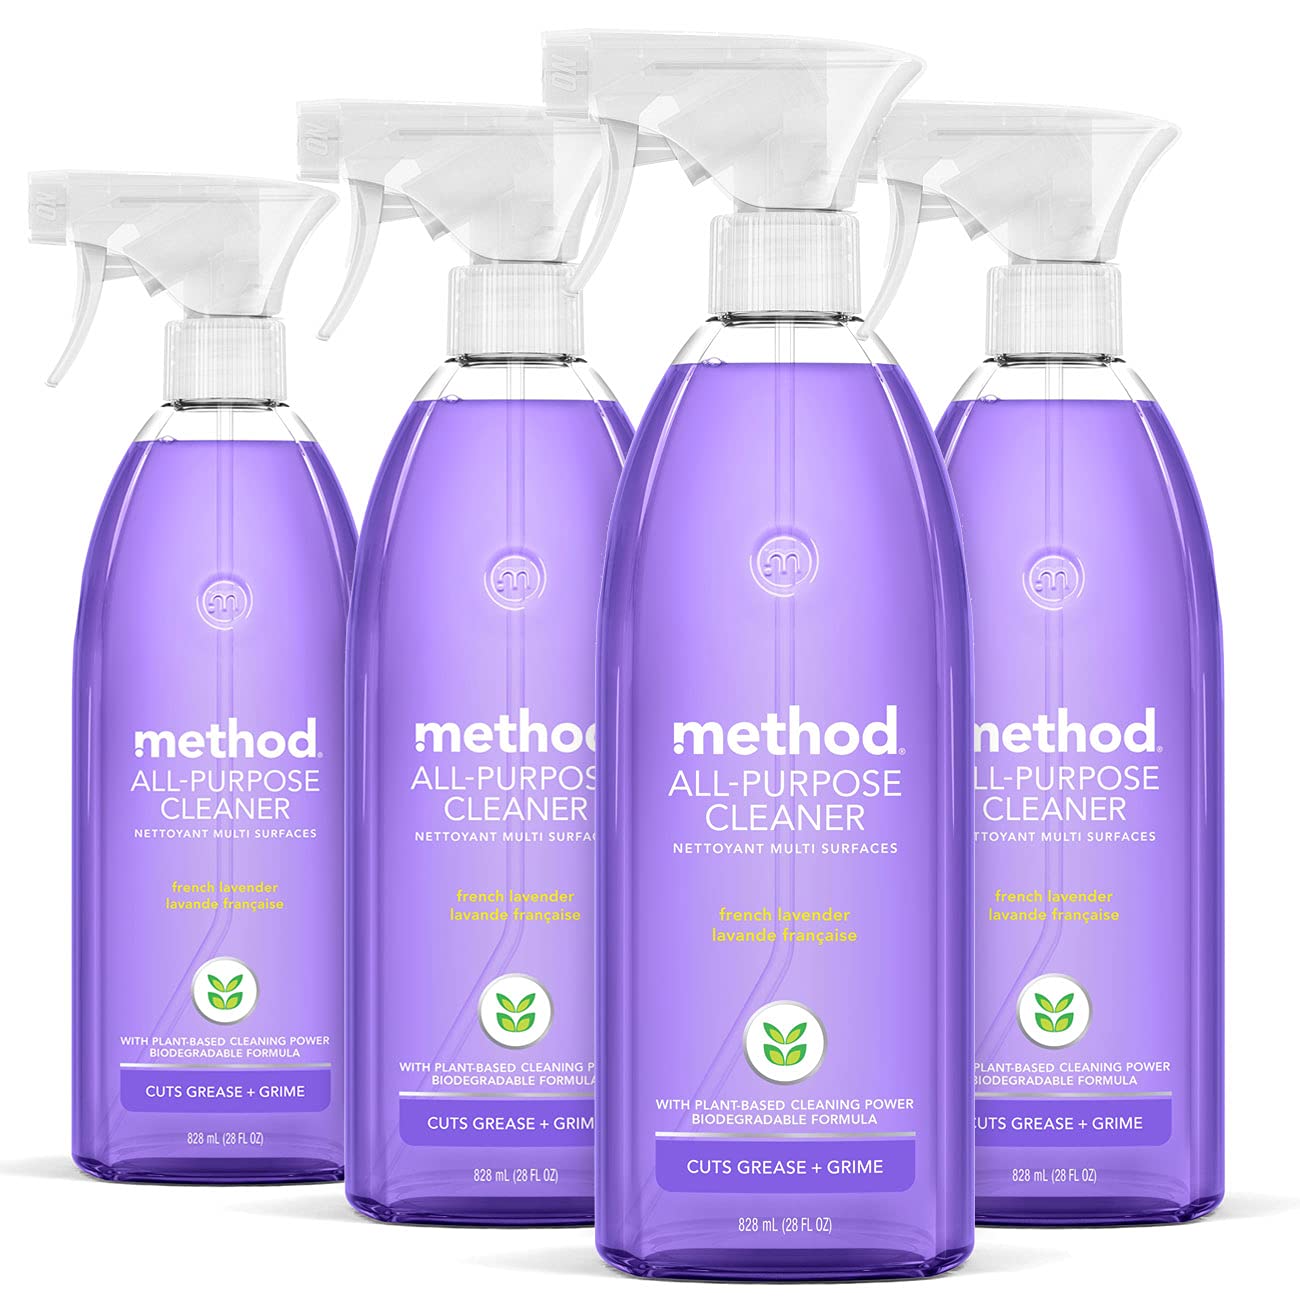 4-Pack 28oz Method All-Purpose Cleaner Spray Bottles (French Lavender) $8.71 w/ S&S